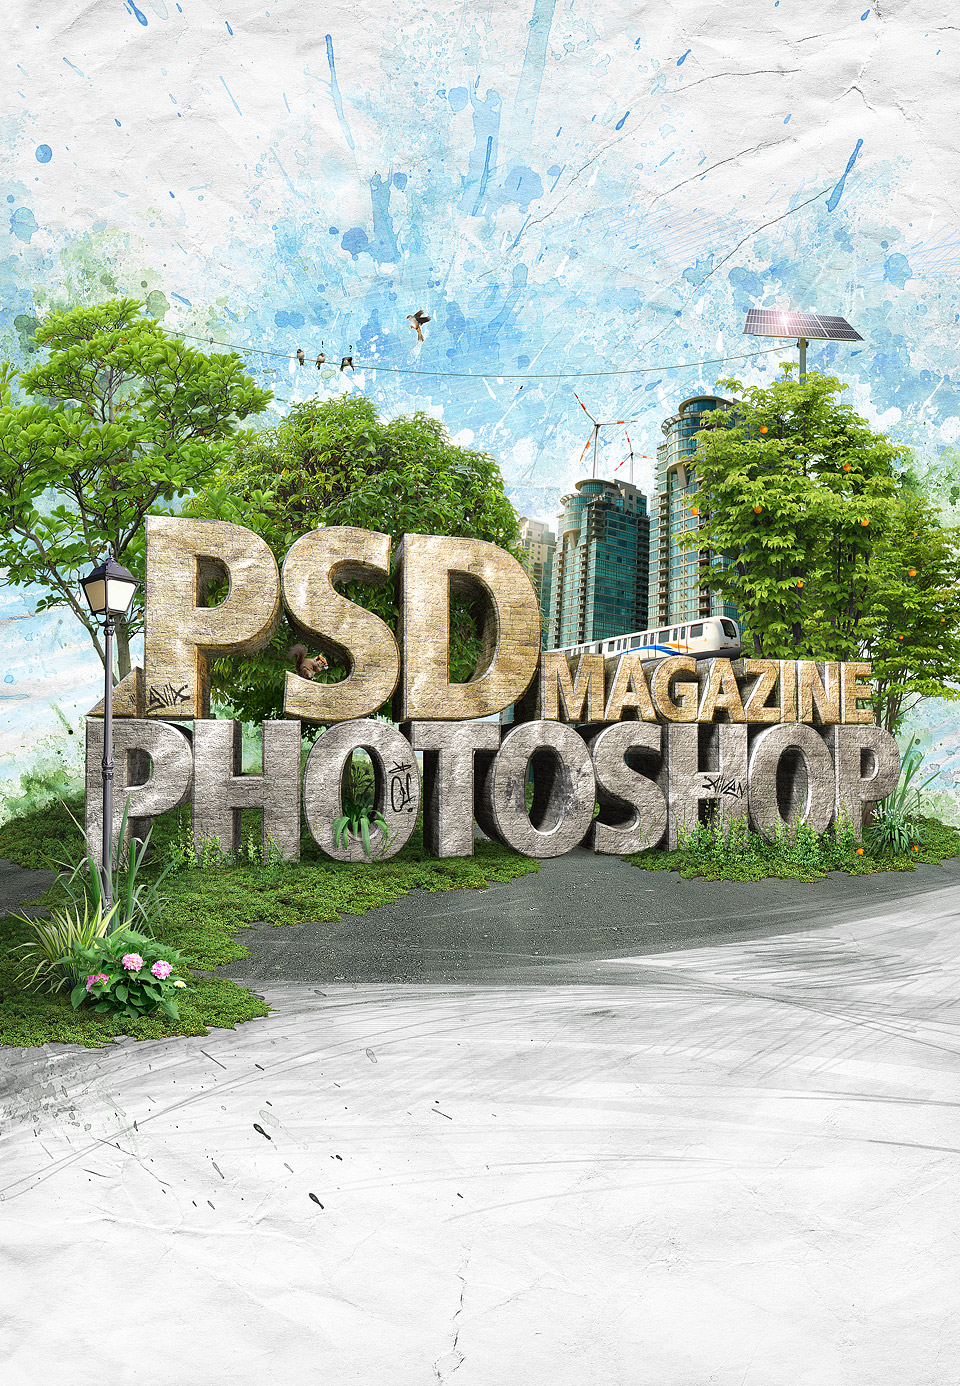 PSD Photoshop Magazine